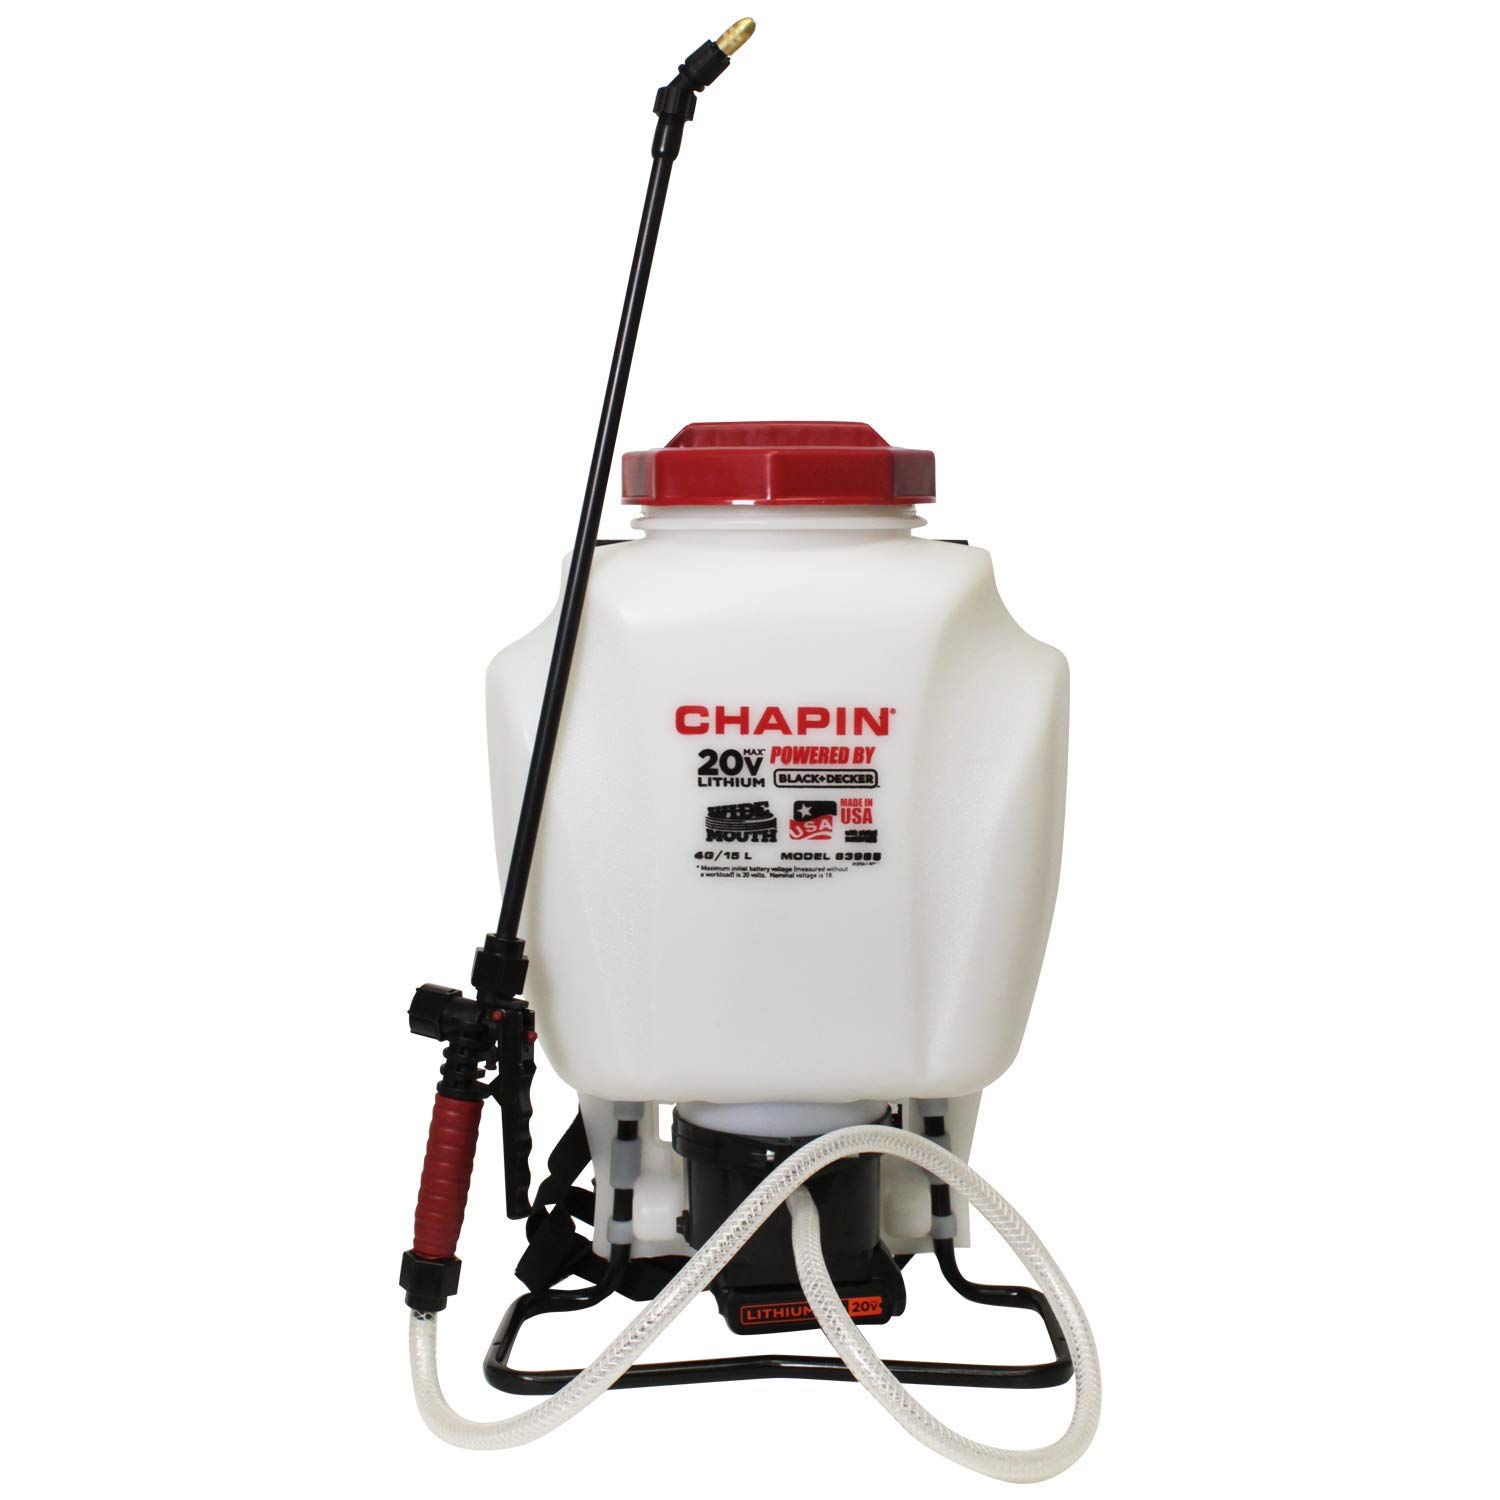  Chapin International 63985 Chapin Battery Backpack Sprayer